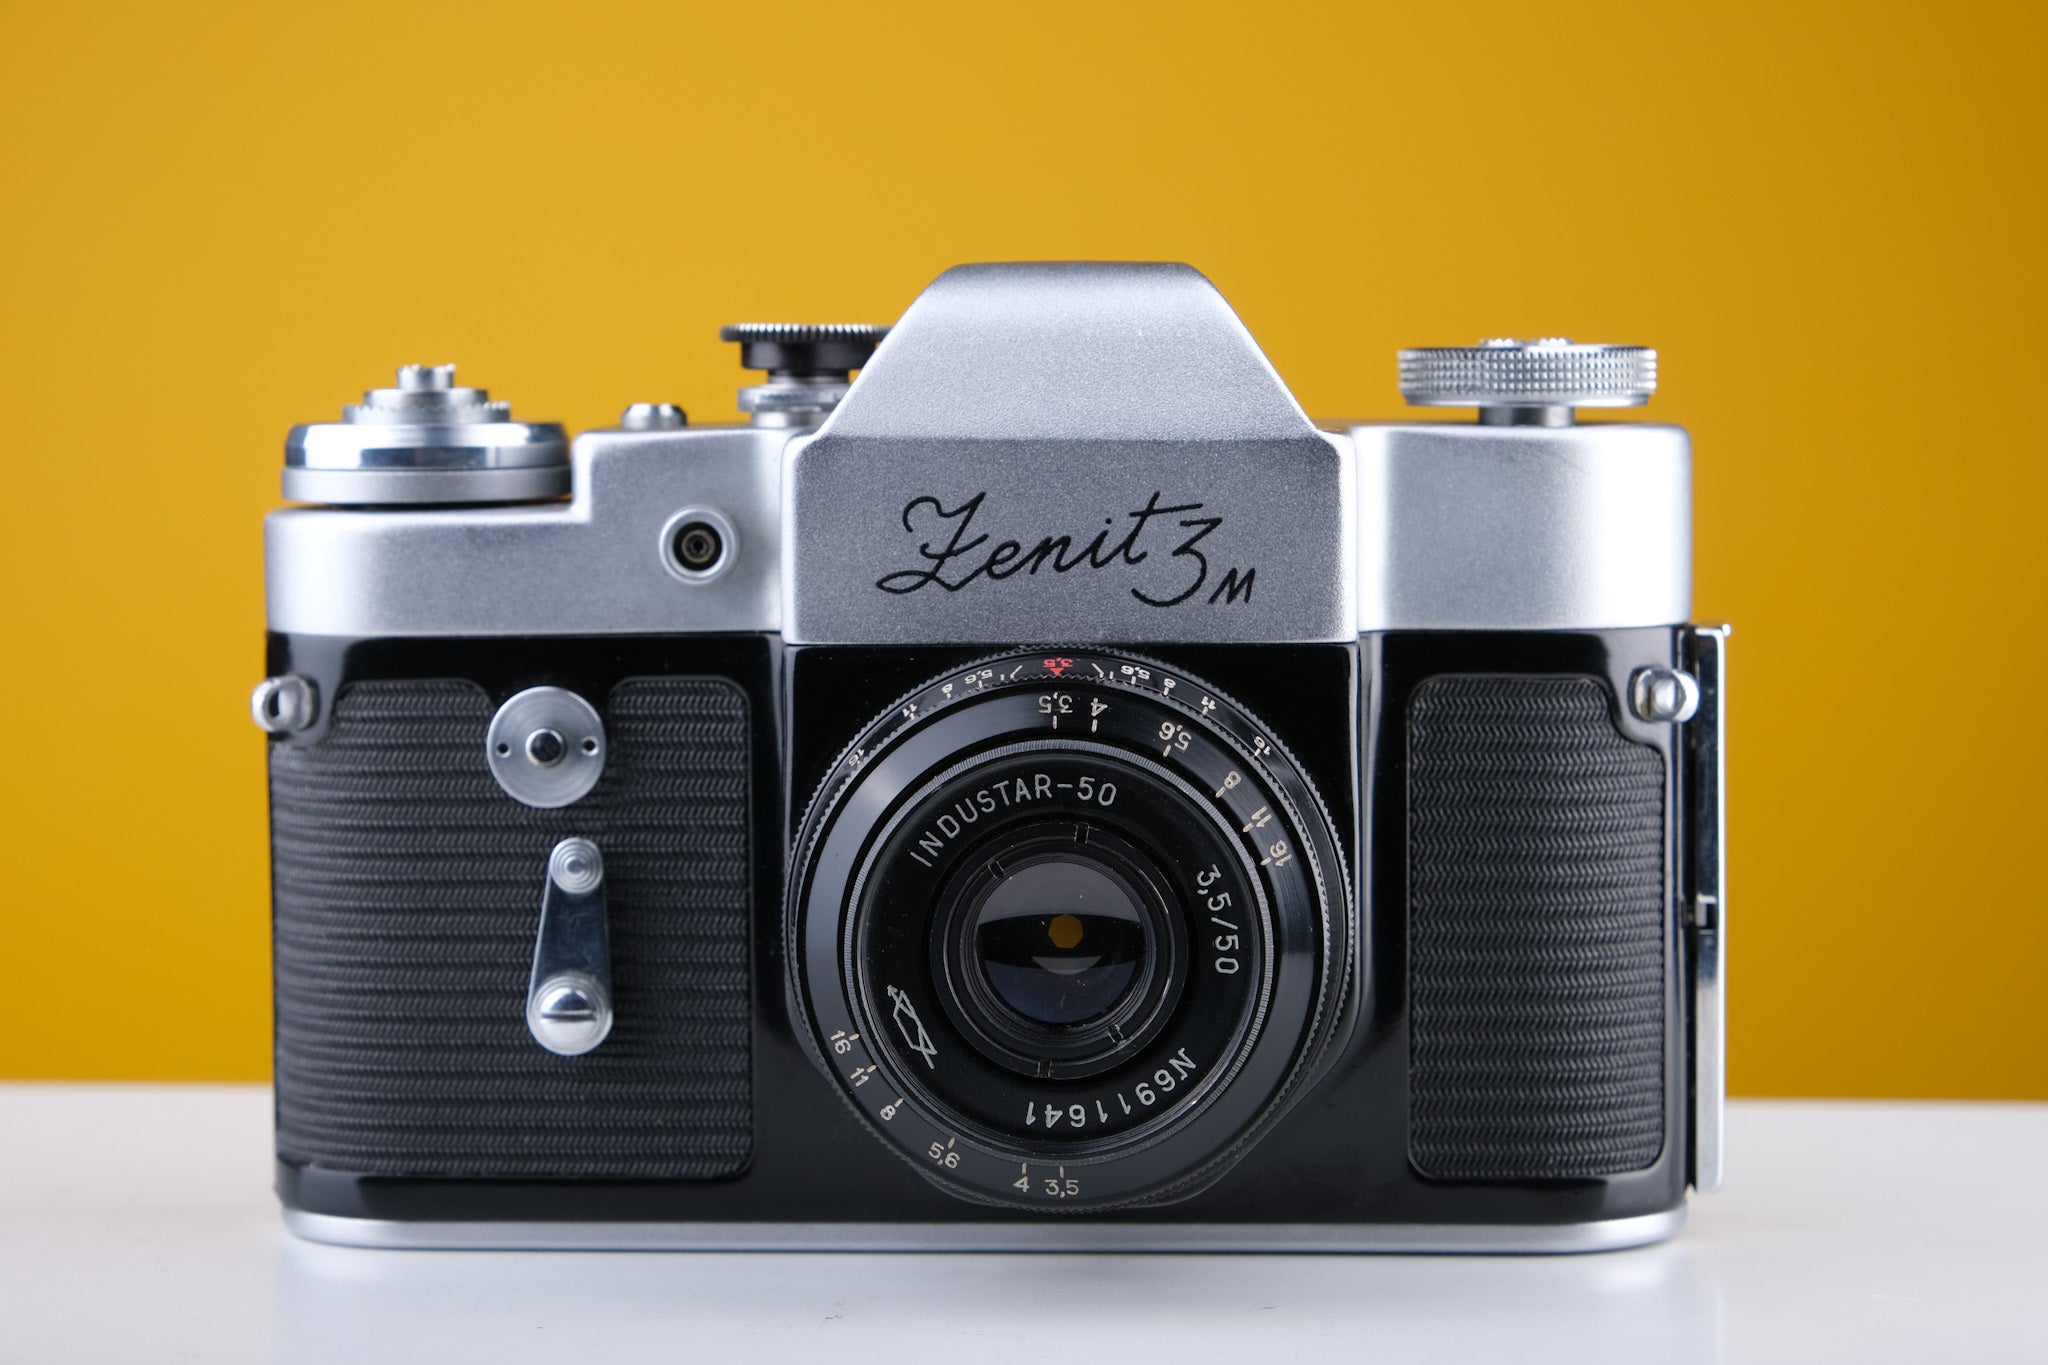 Zenit 3M 35mm SLR Film Camera with Industar 50mm f3.5 Lens